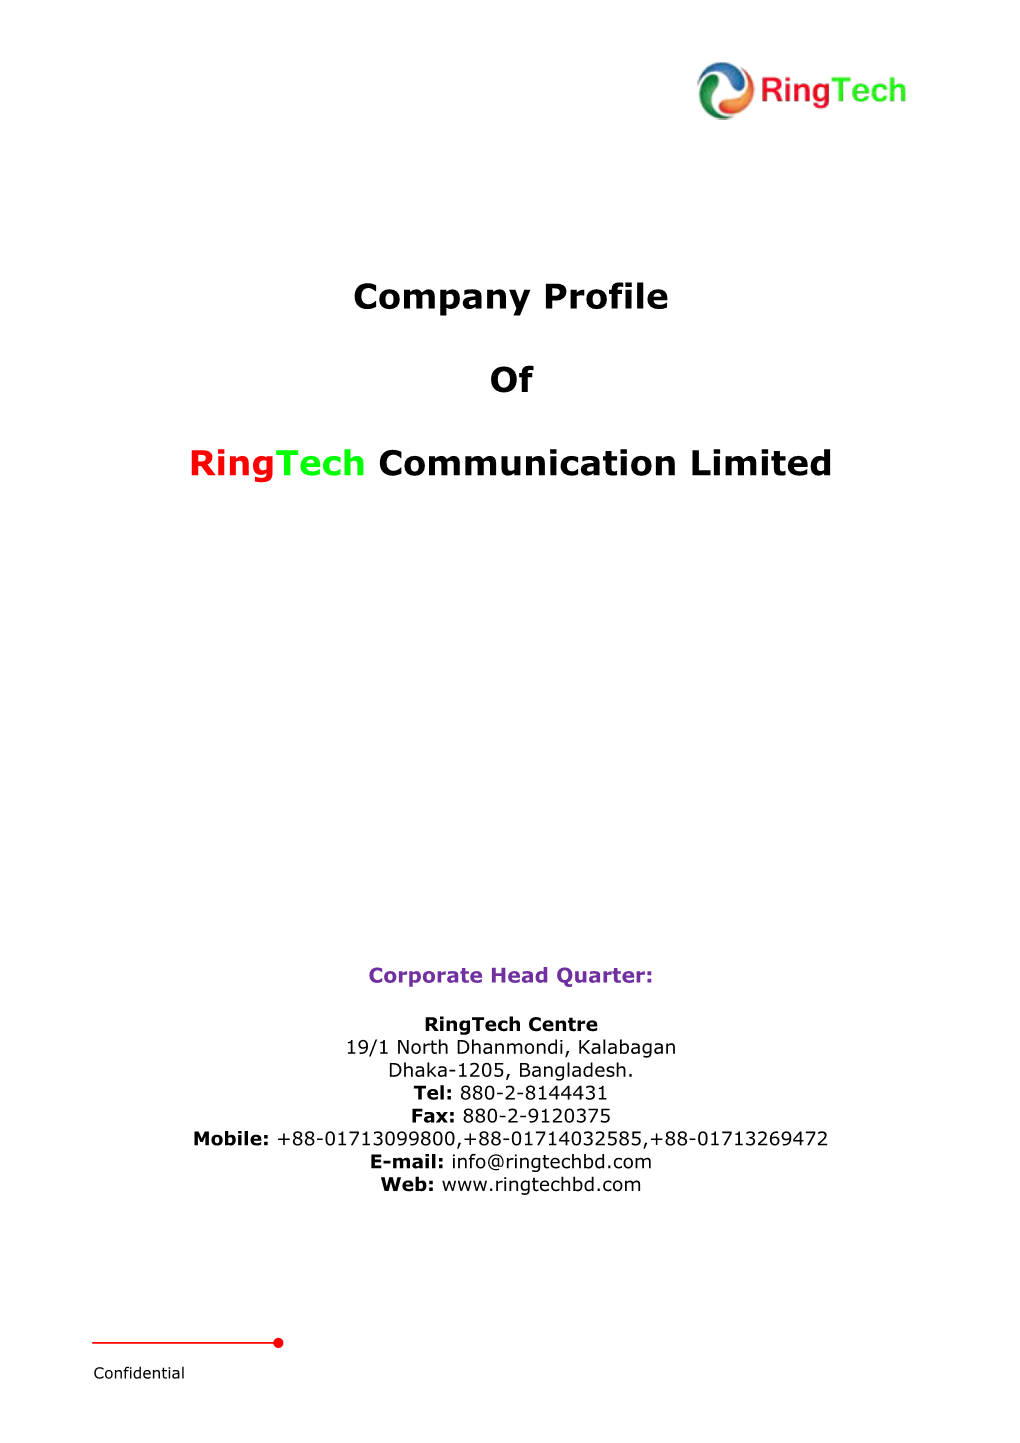 Ringtechcommunication Limited